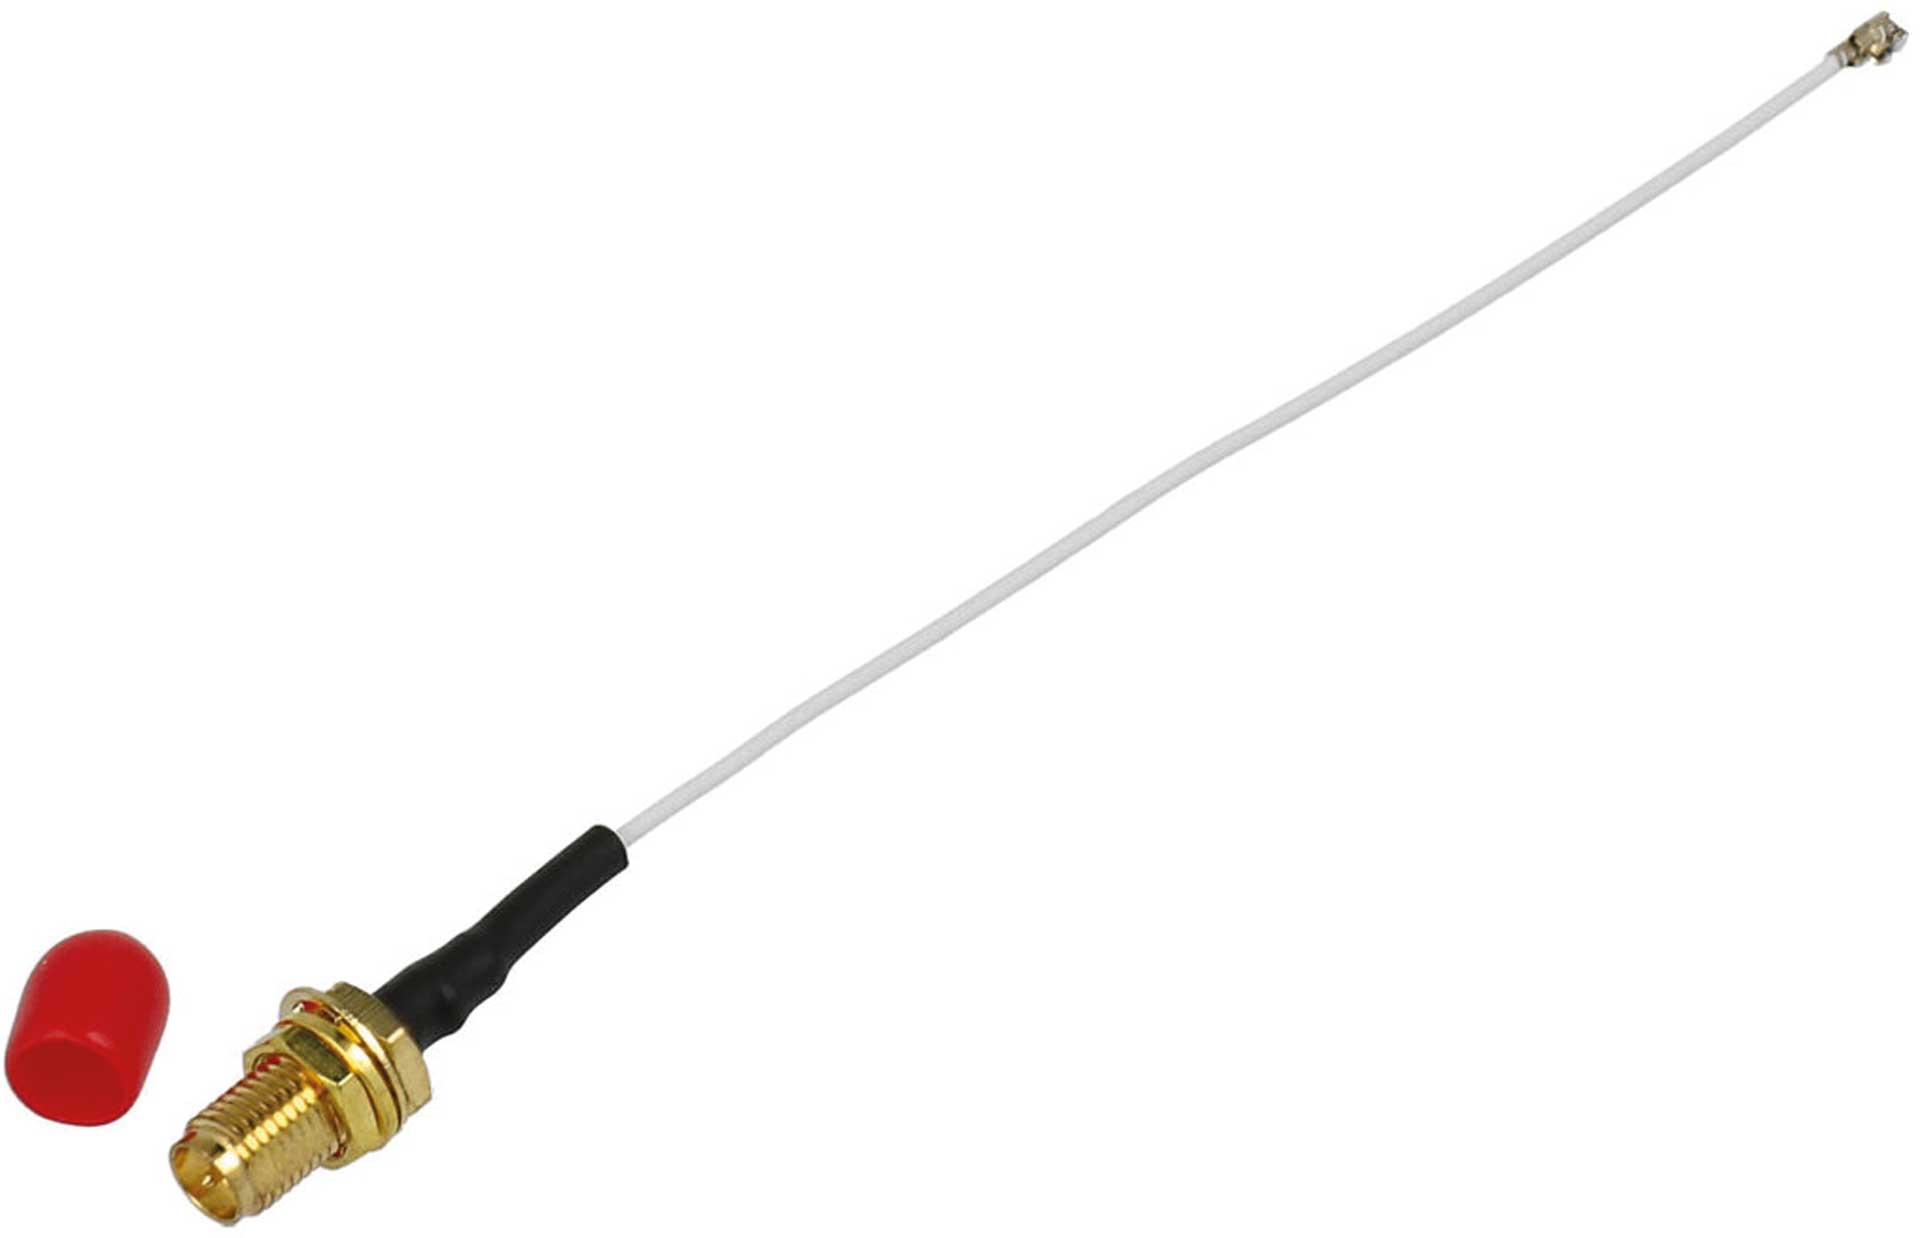 Flysky Antenna Adapter Cable